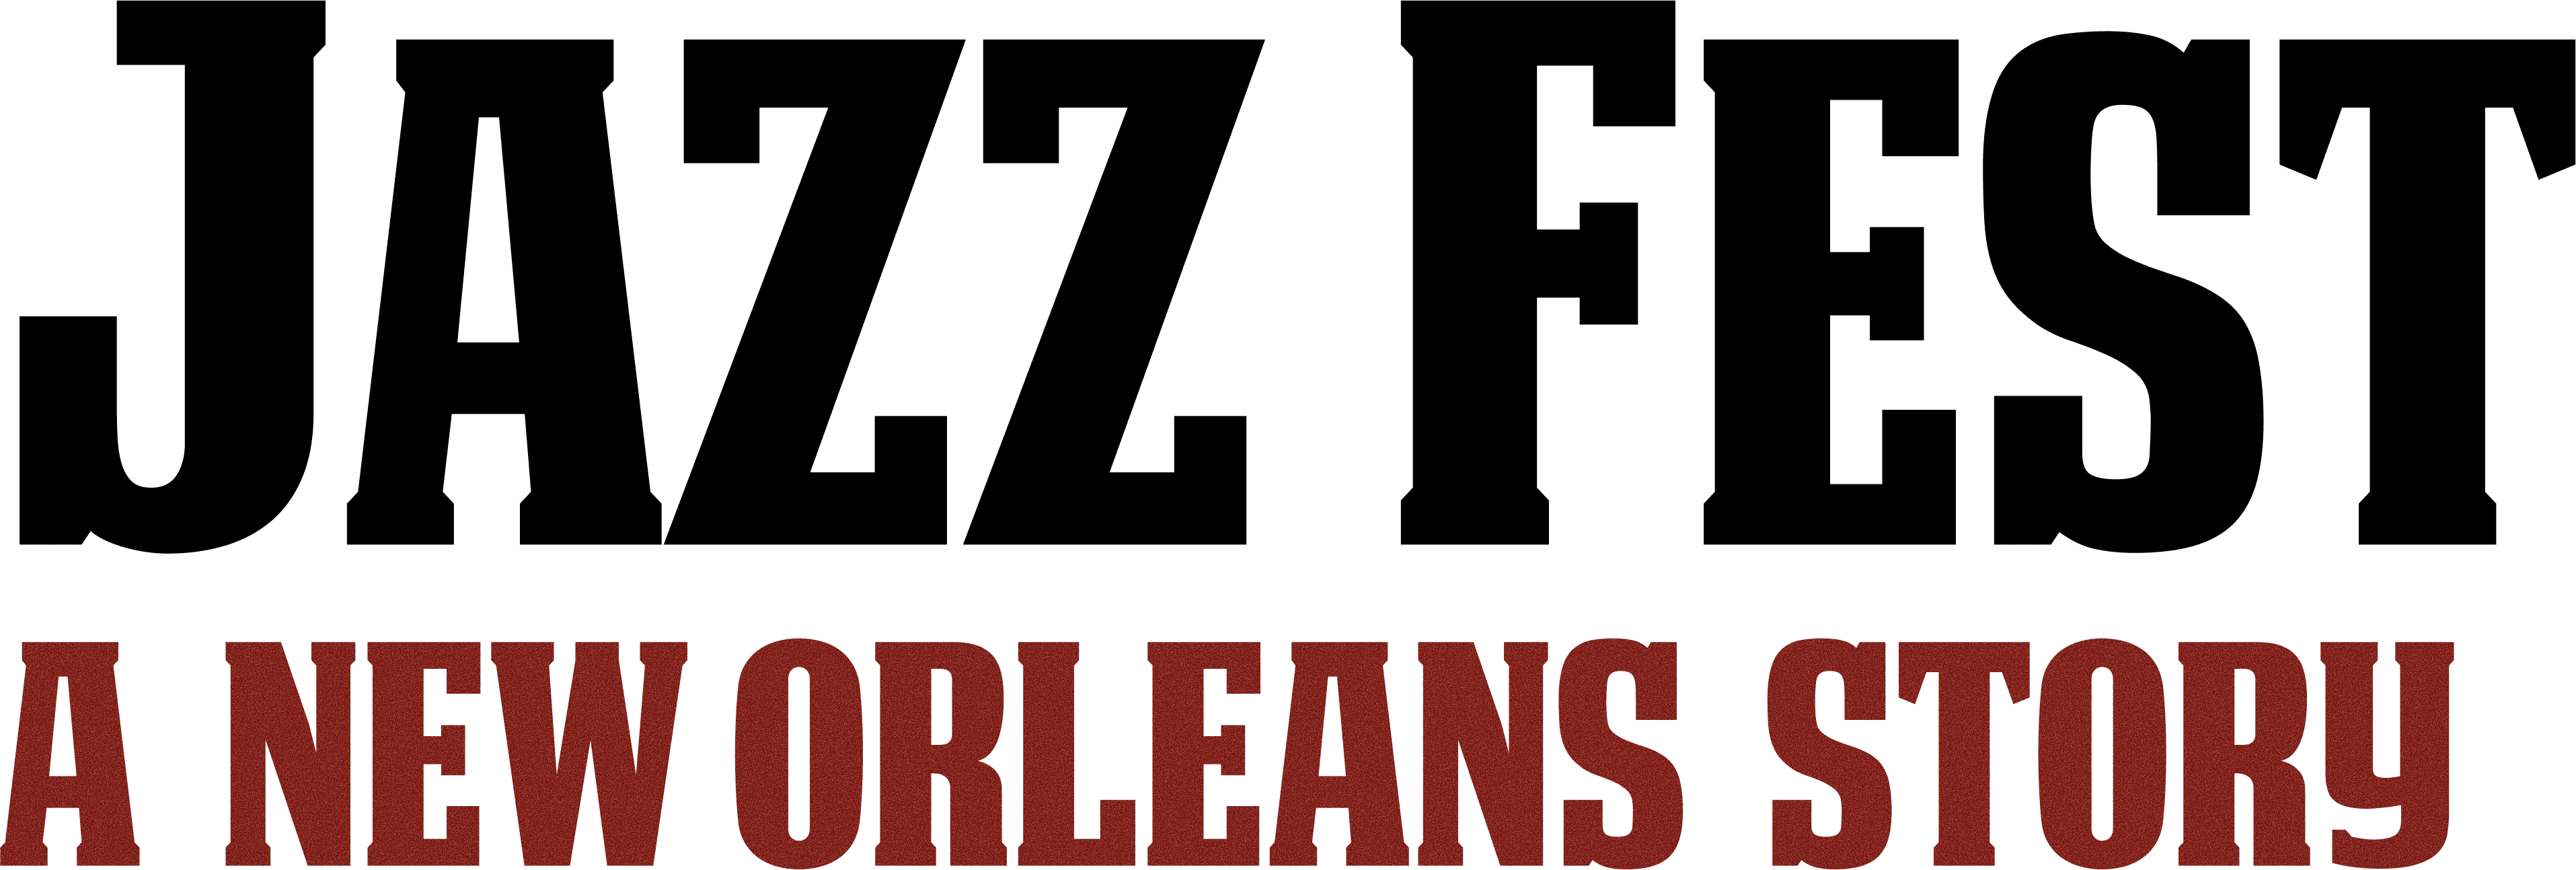 Jazz Fest: A New Orleans Story logo